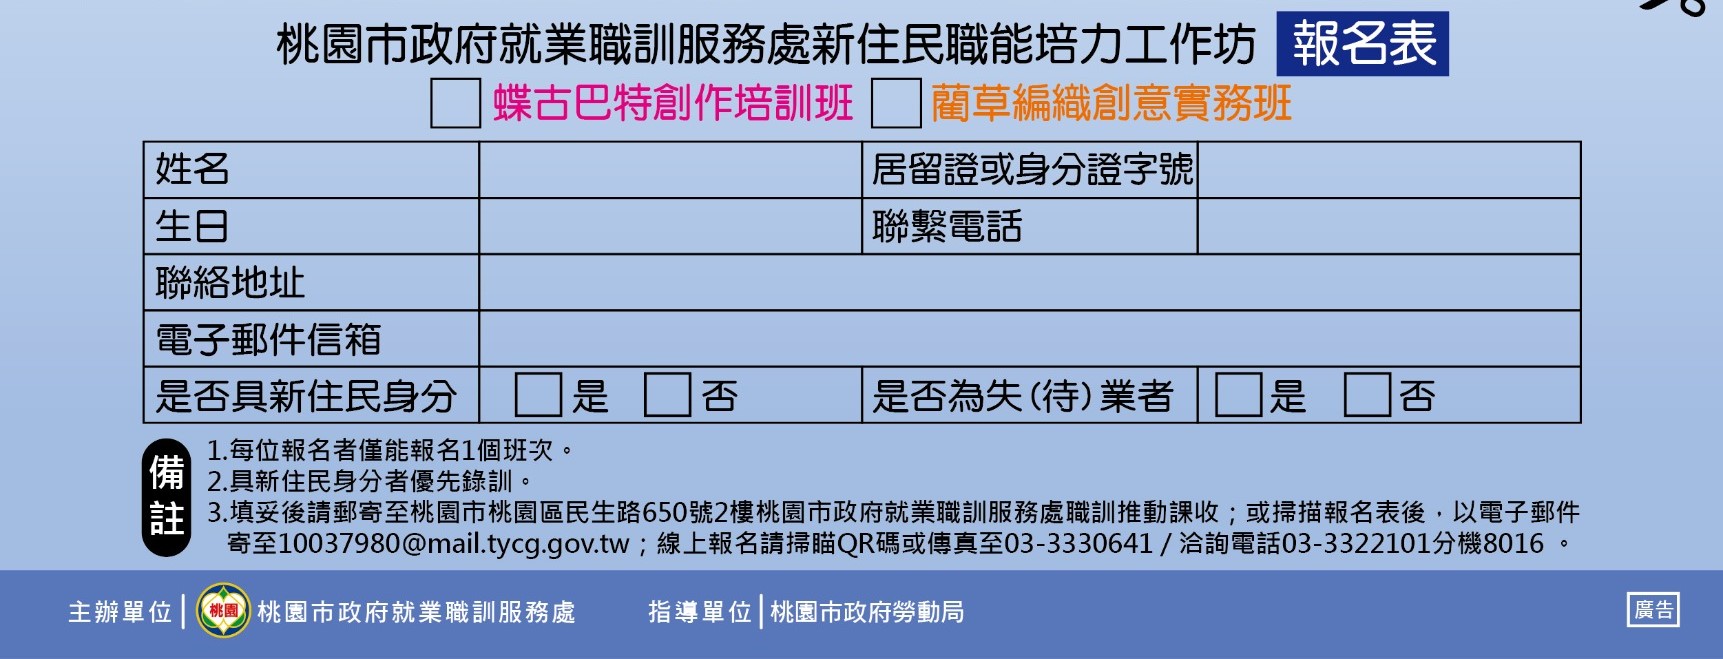 Penduduk baru yang ingin mendaftar harus mengisi formulir pendaftaran. Sumber: Diambil dari Biro Tenaga Kerja Taoyuan